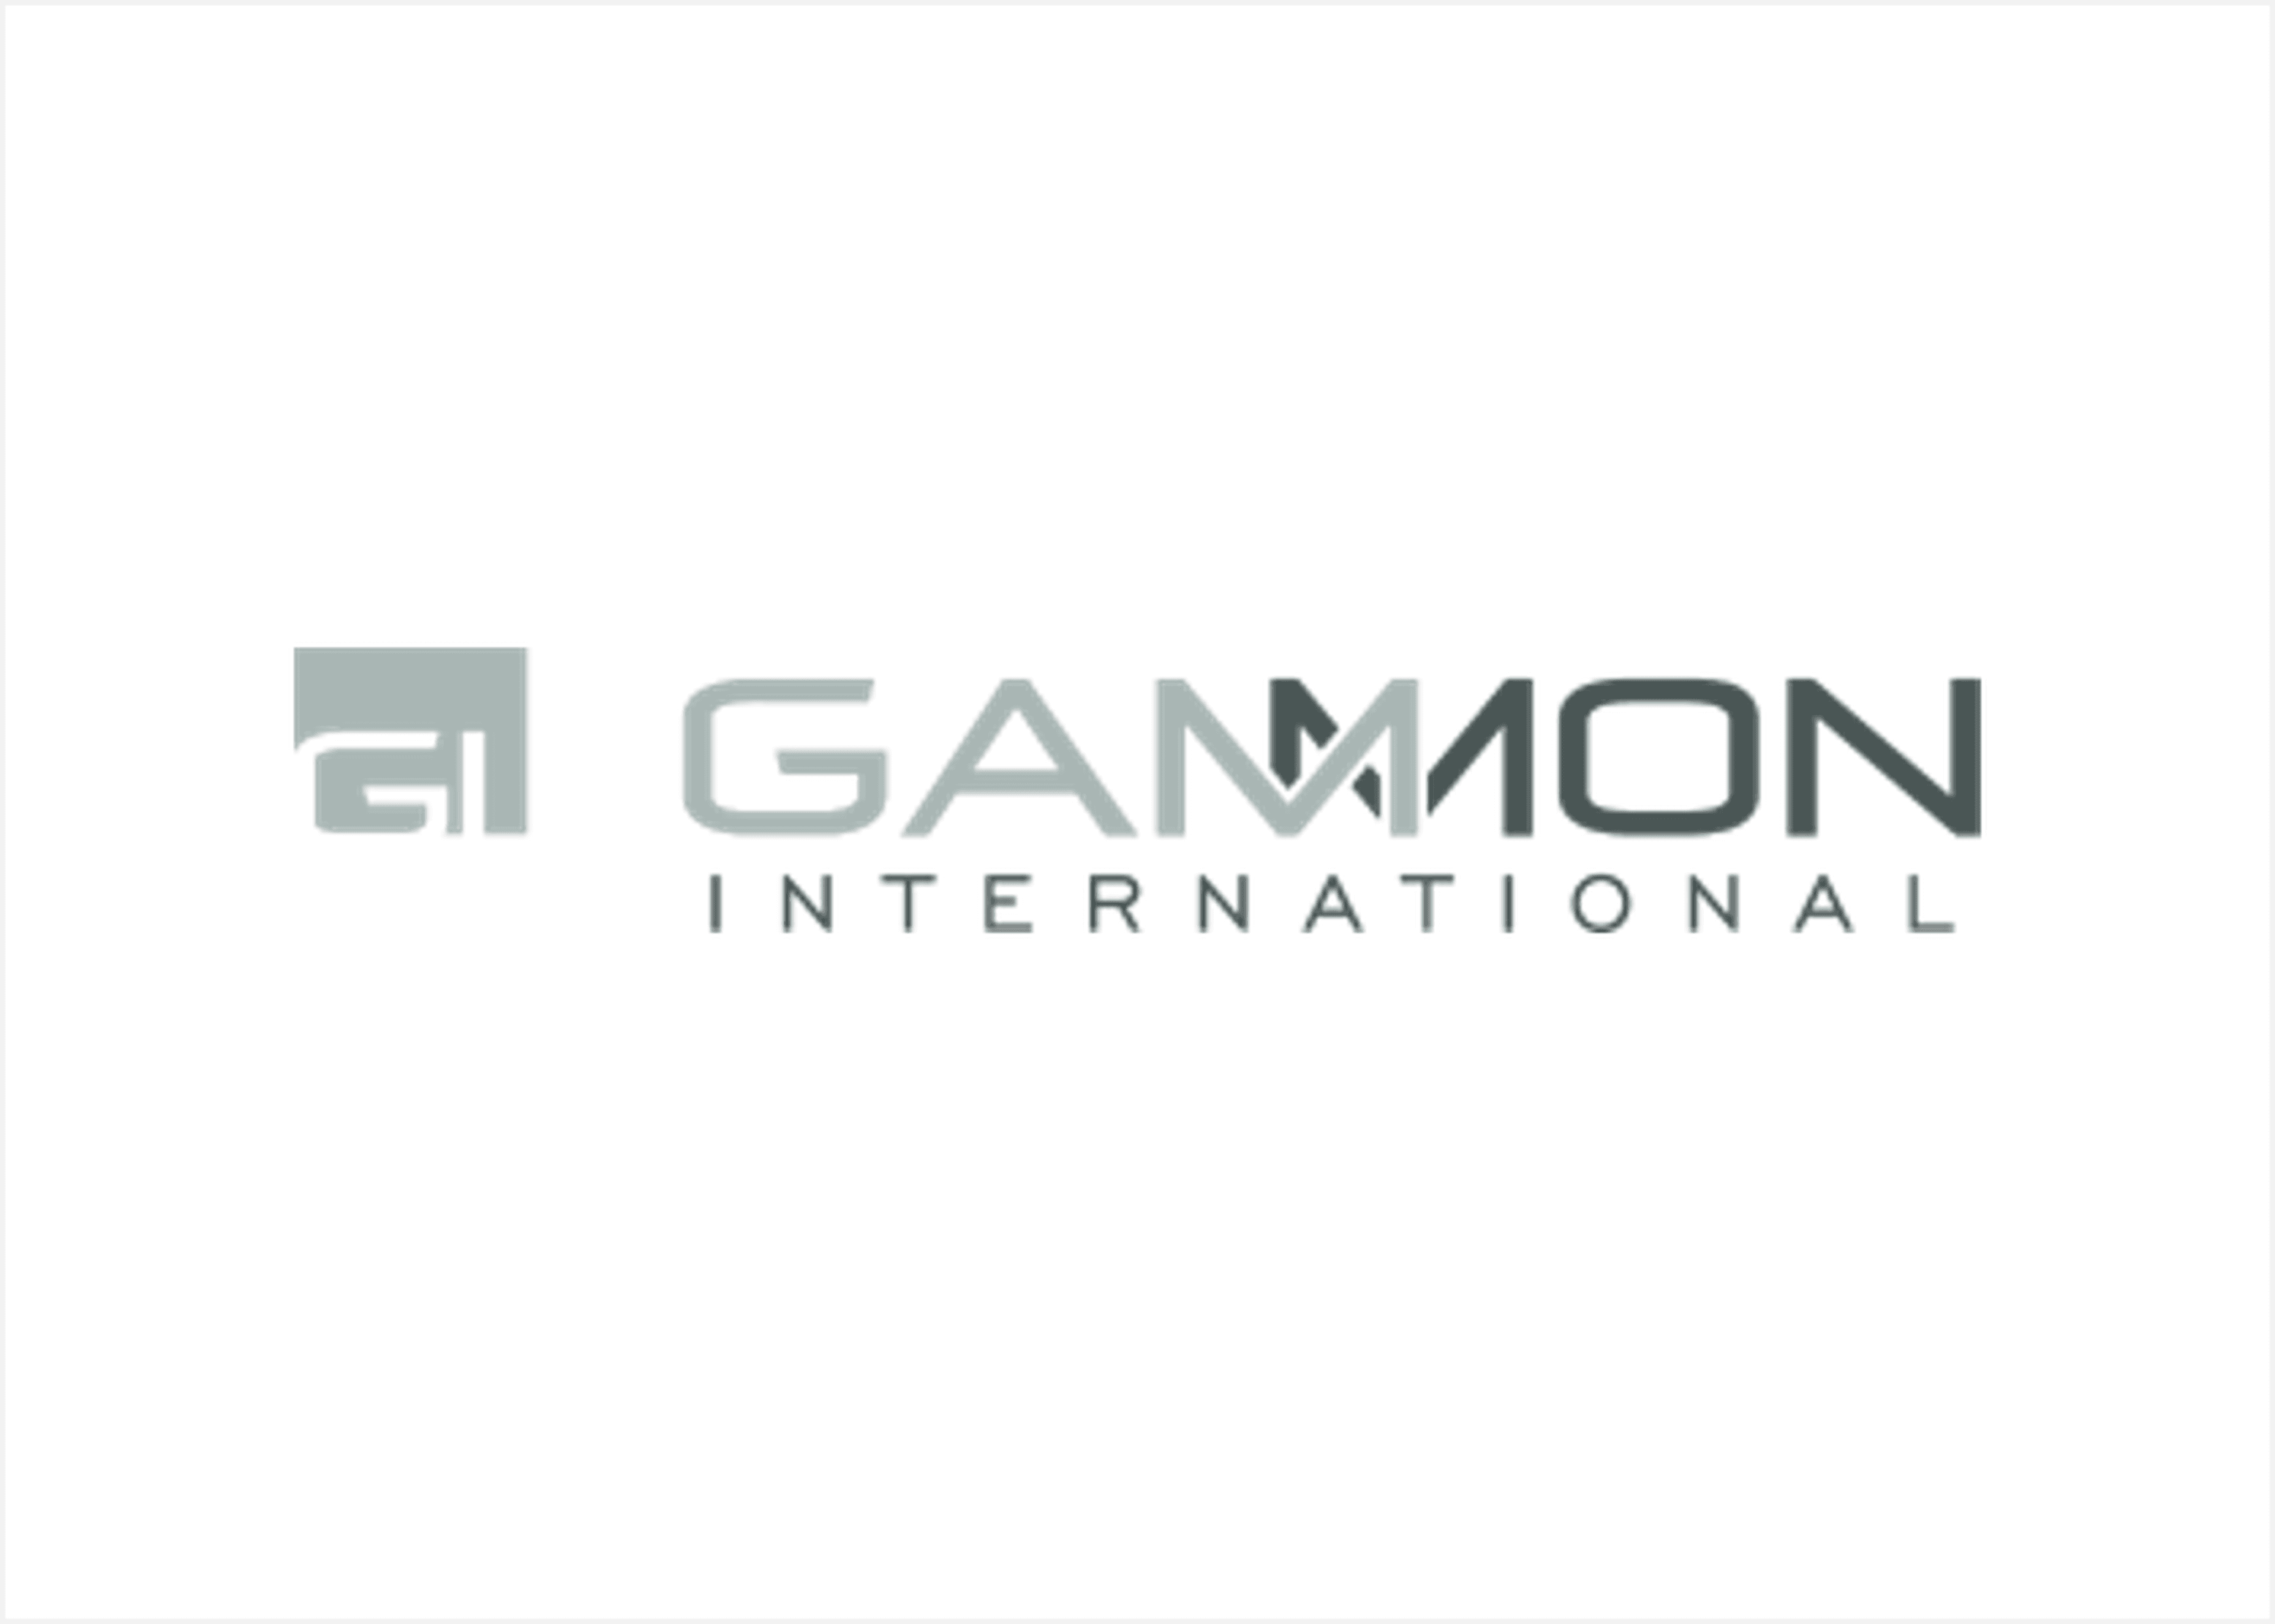 Gammon International Logo